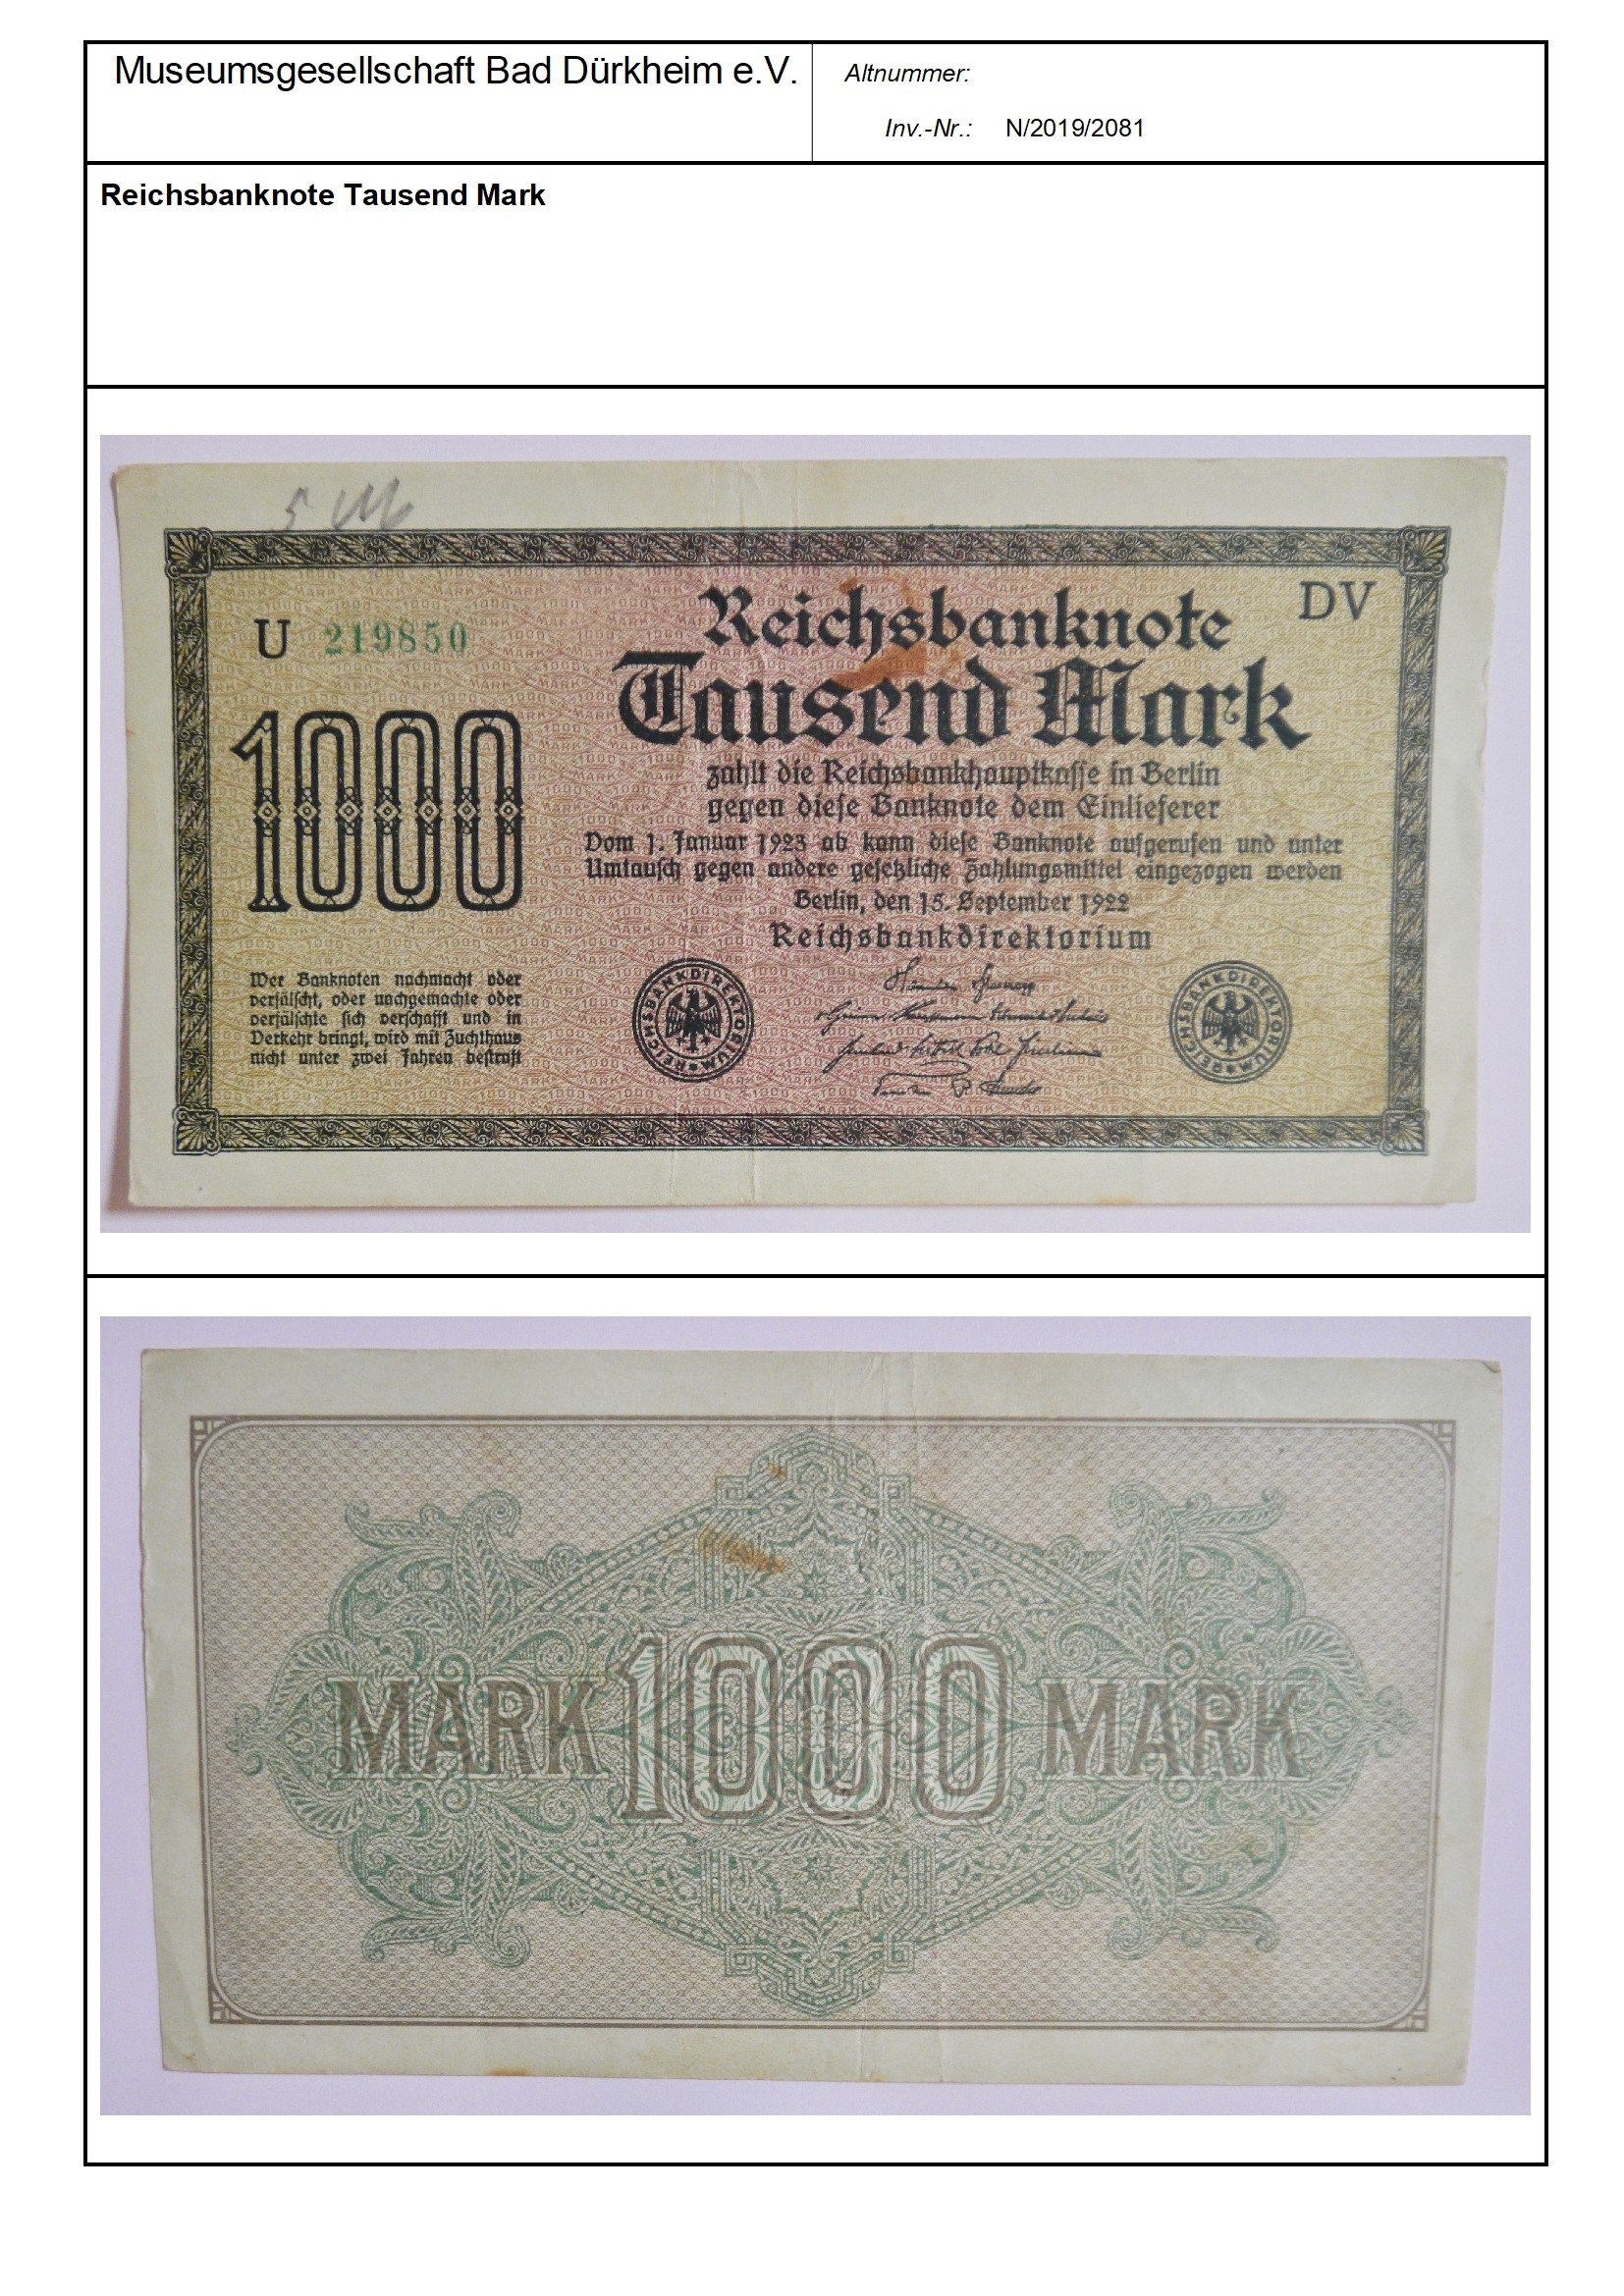 Reichsbanknote Tausend Mark
Serien-Nummer: U 219850 DV (Museumsgesellschaft Bad Dürkheim e.V. CC BY-NC-SA)